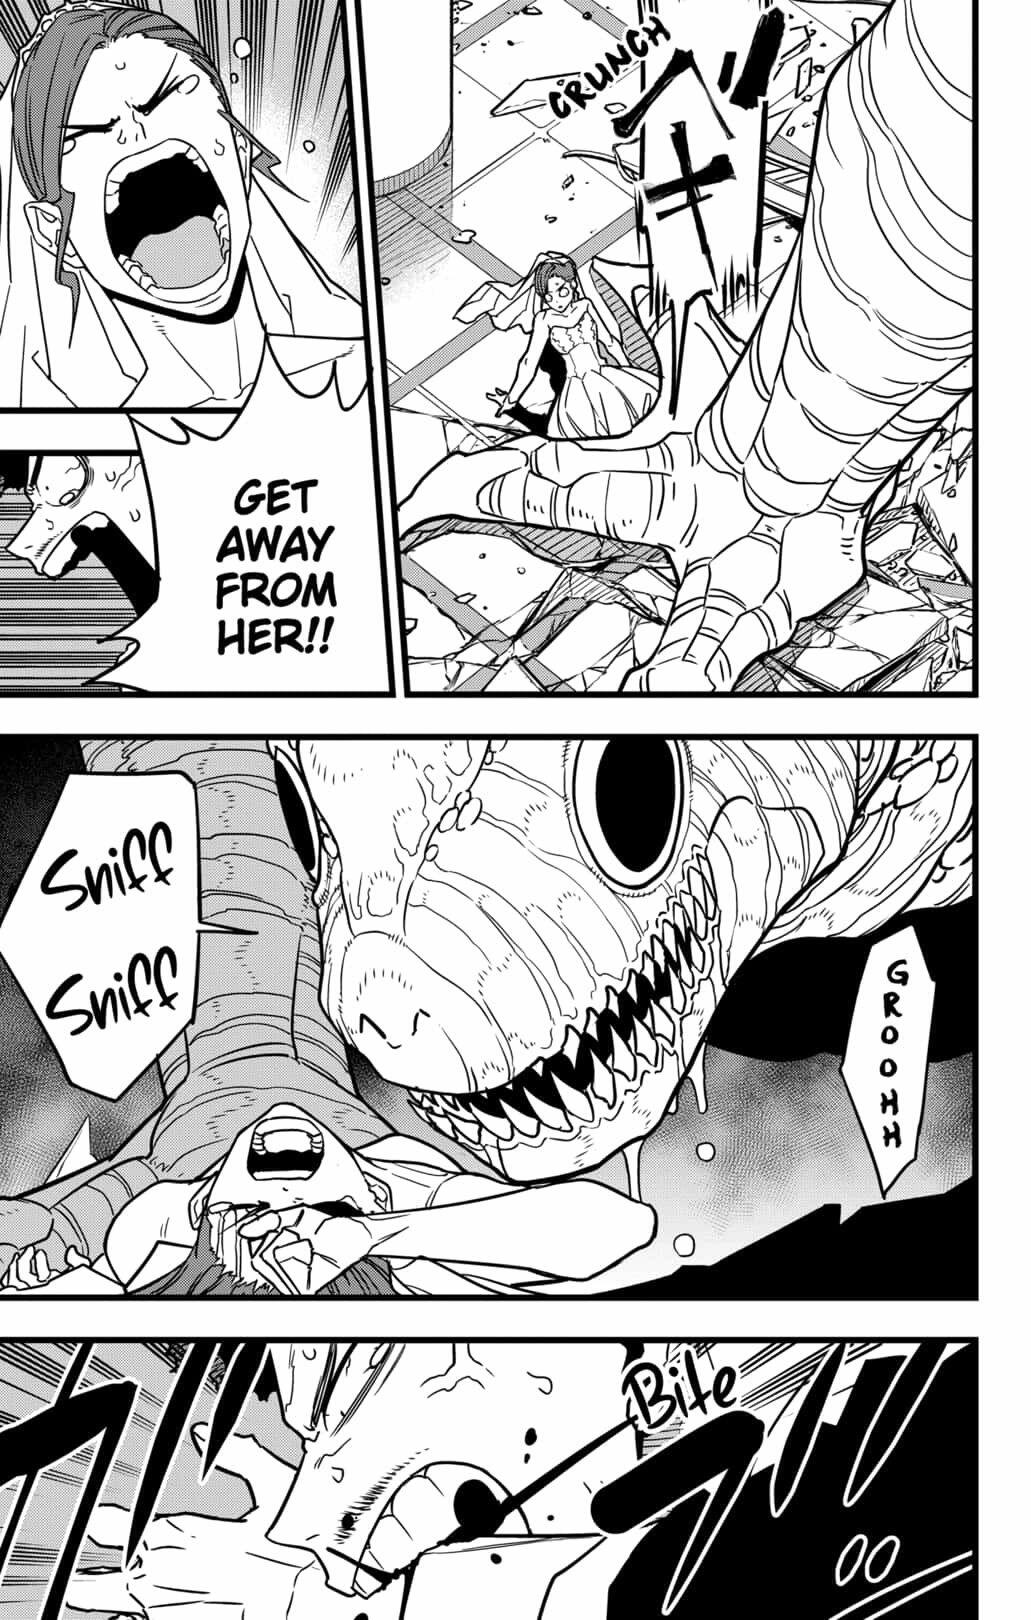 Kaiju No. 8 Chapter 70 page 14 - Mangakakalot